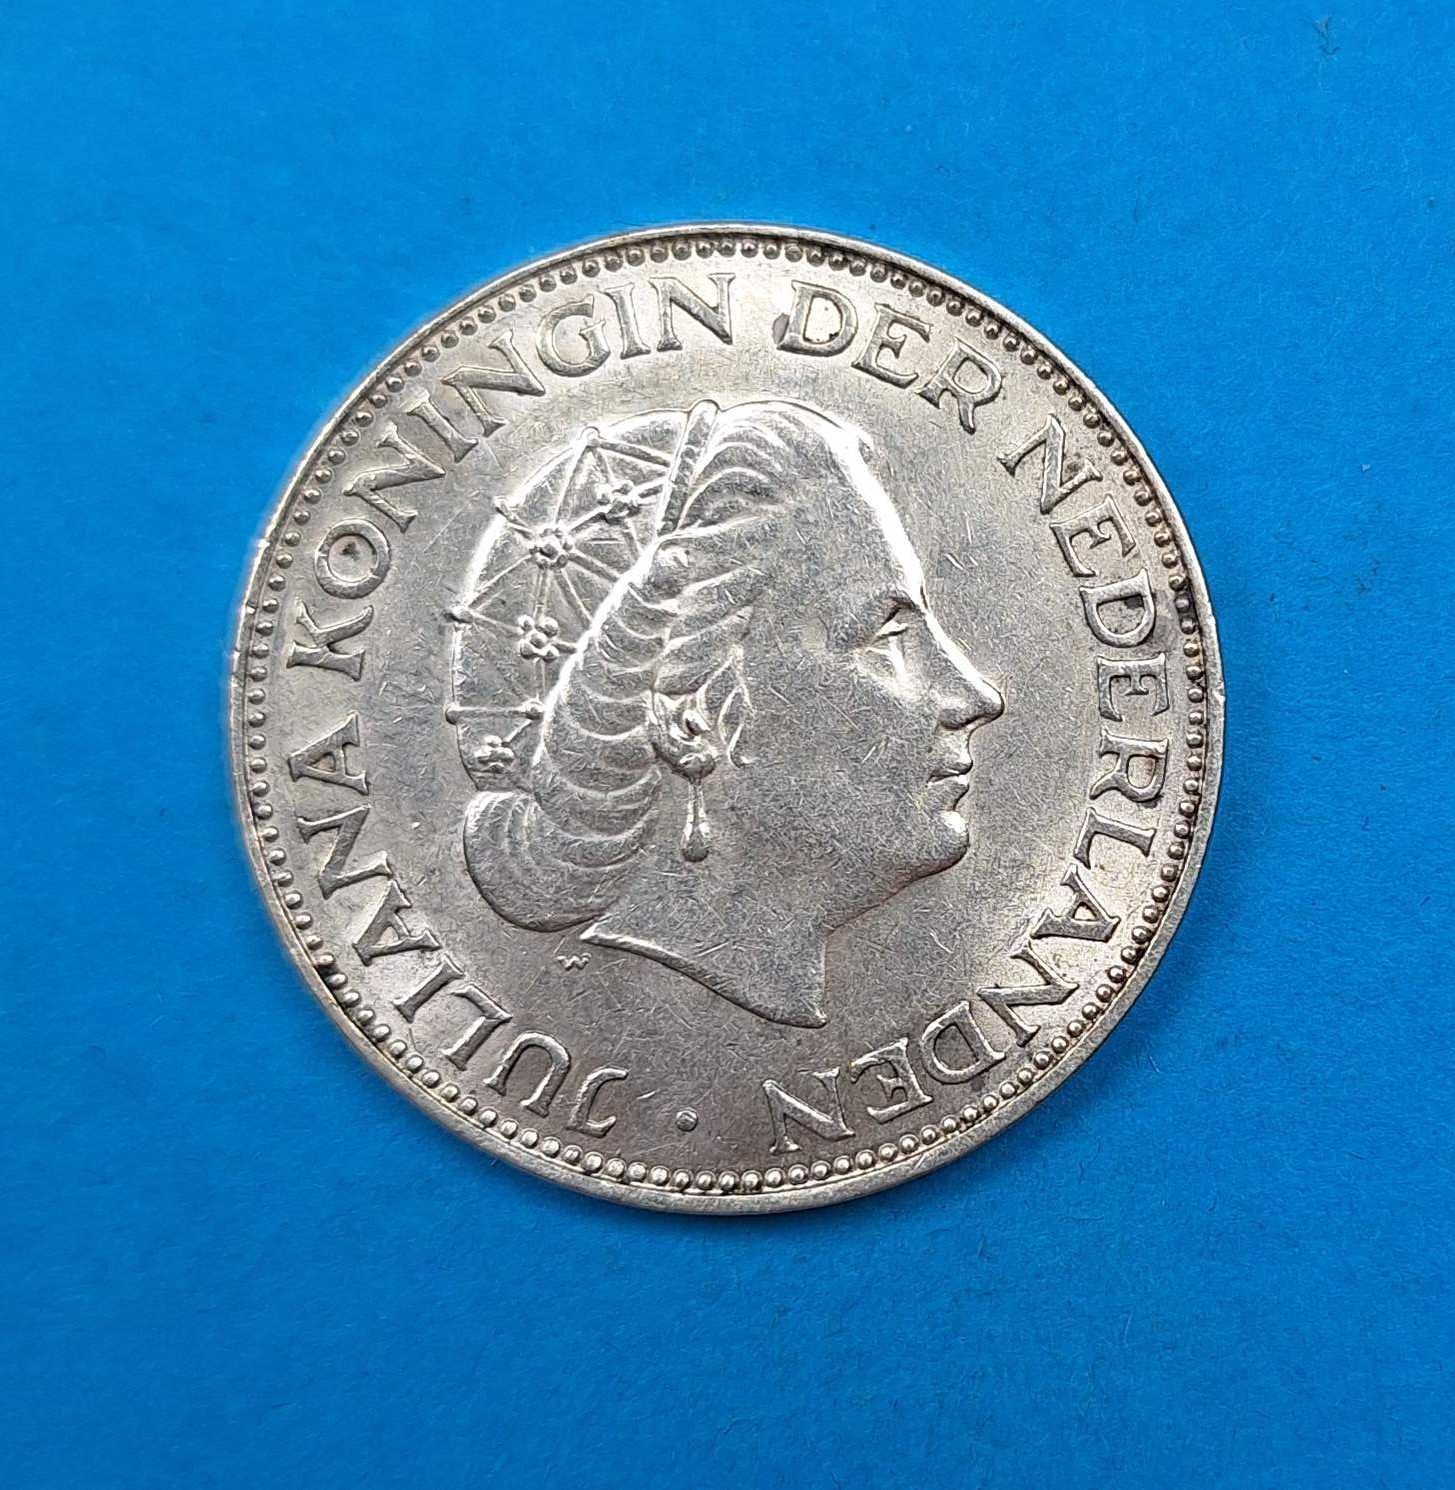 Holandia 2 1/2 guldena 1959, Królowa Juliana, bdb stan, srebro 0,720